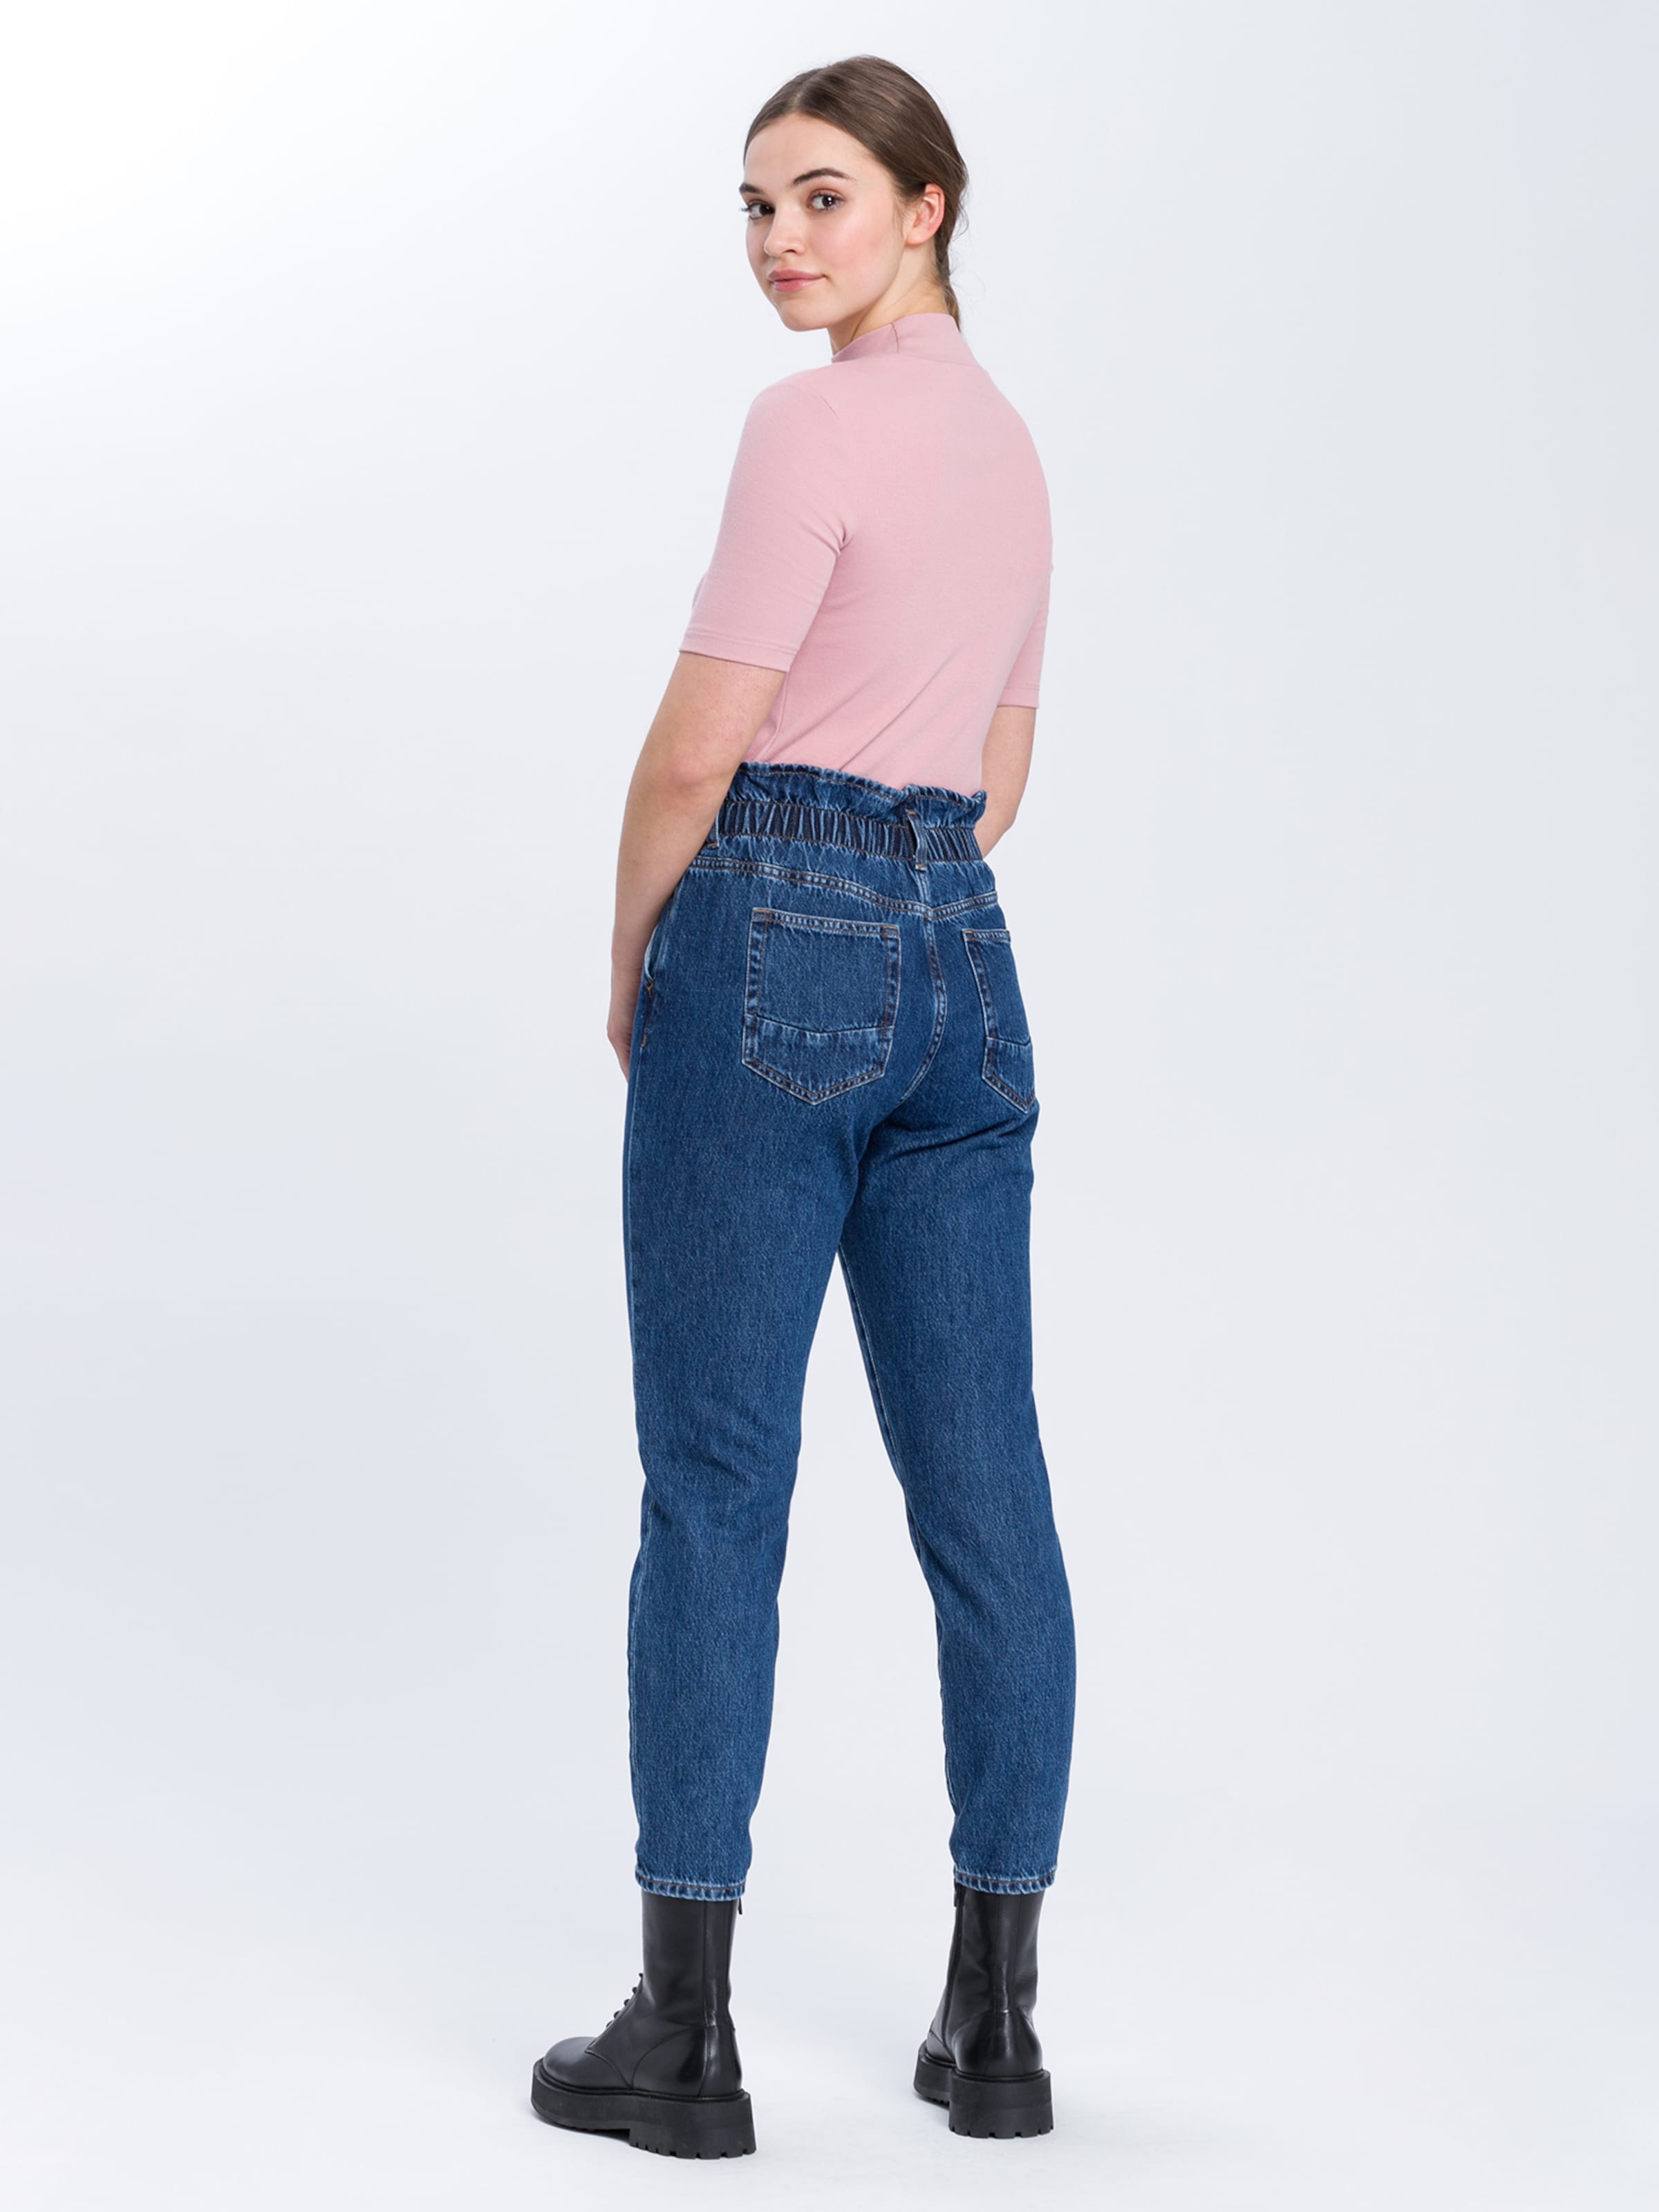 Frauen Jeans Cross Jeans Hose in Blau - AE11250